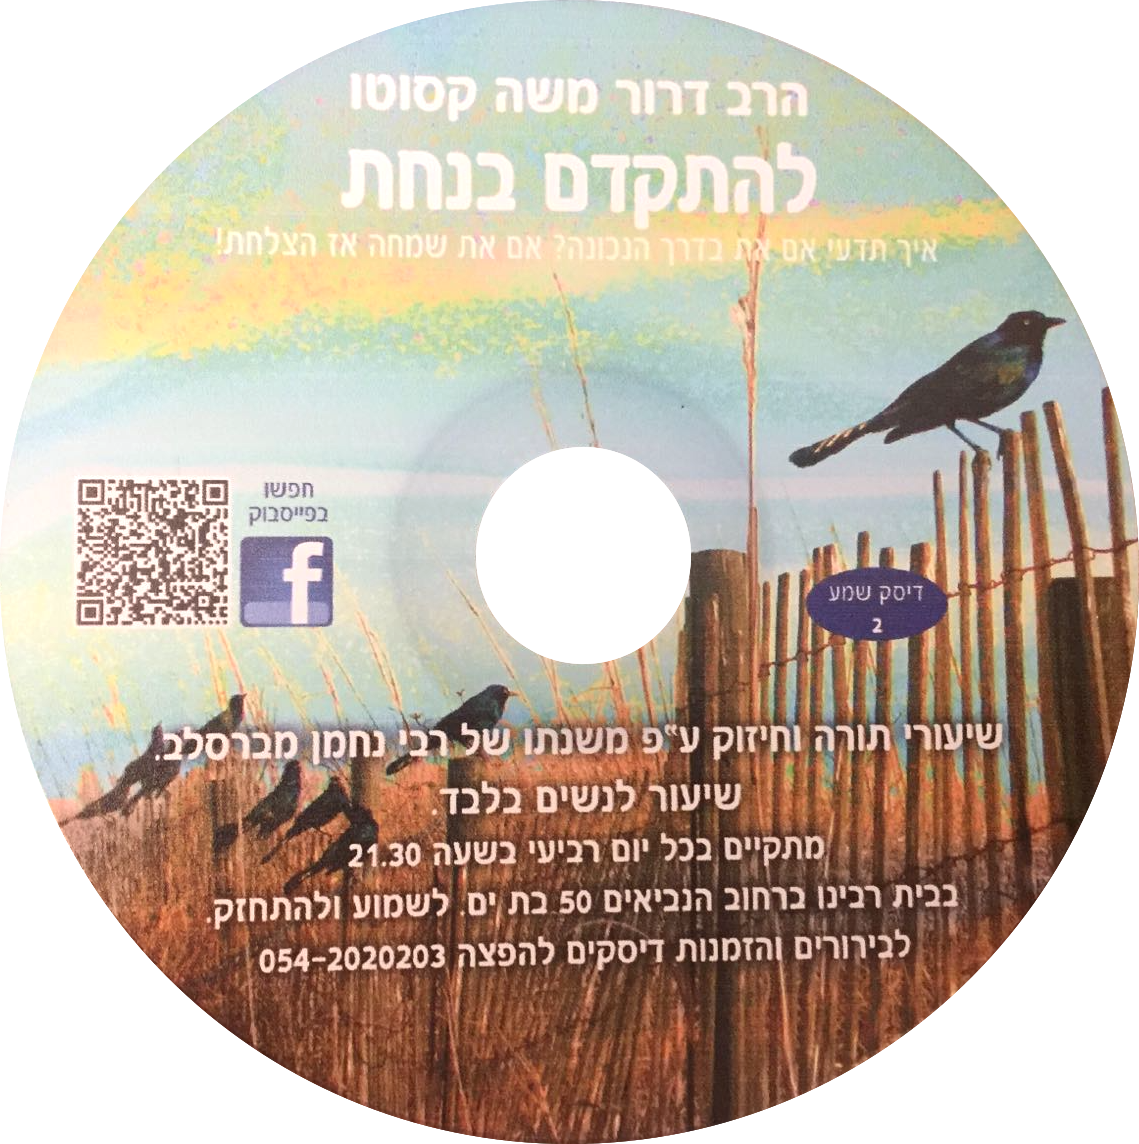 Keep Going (CD en hebreo para mujeres)